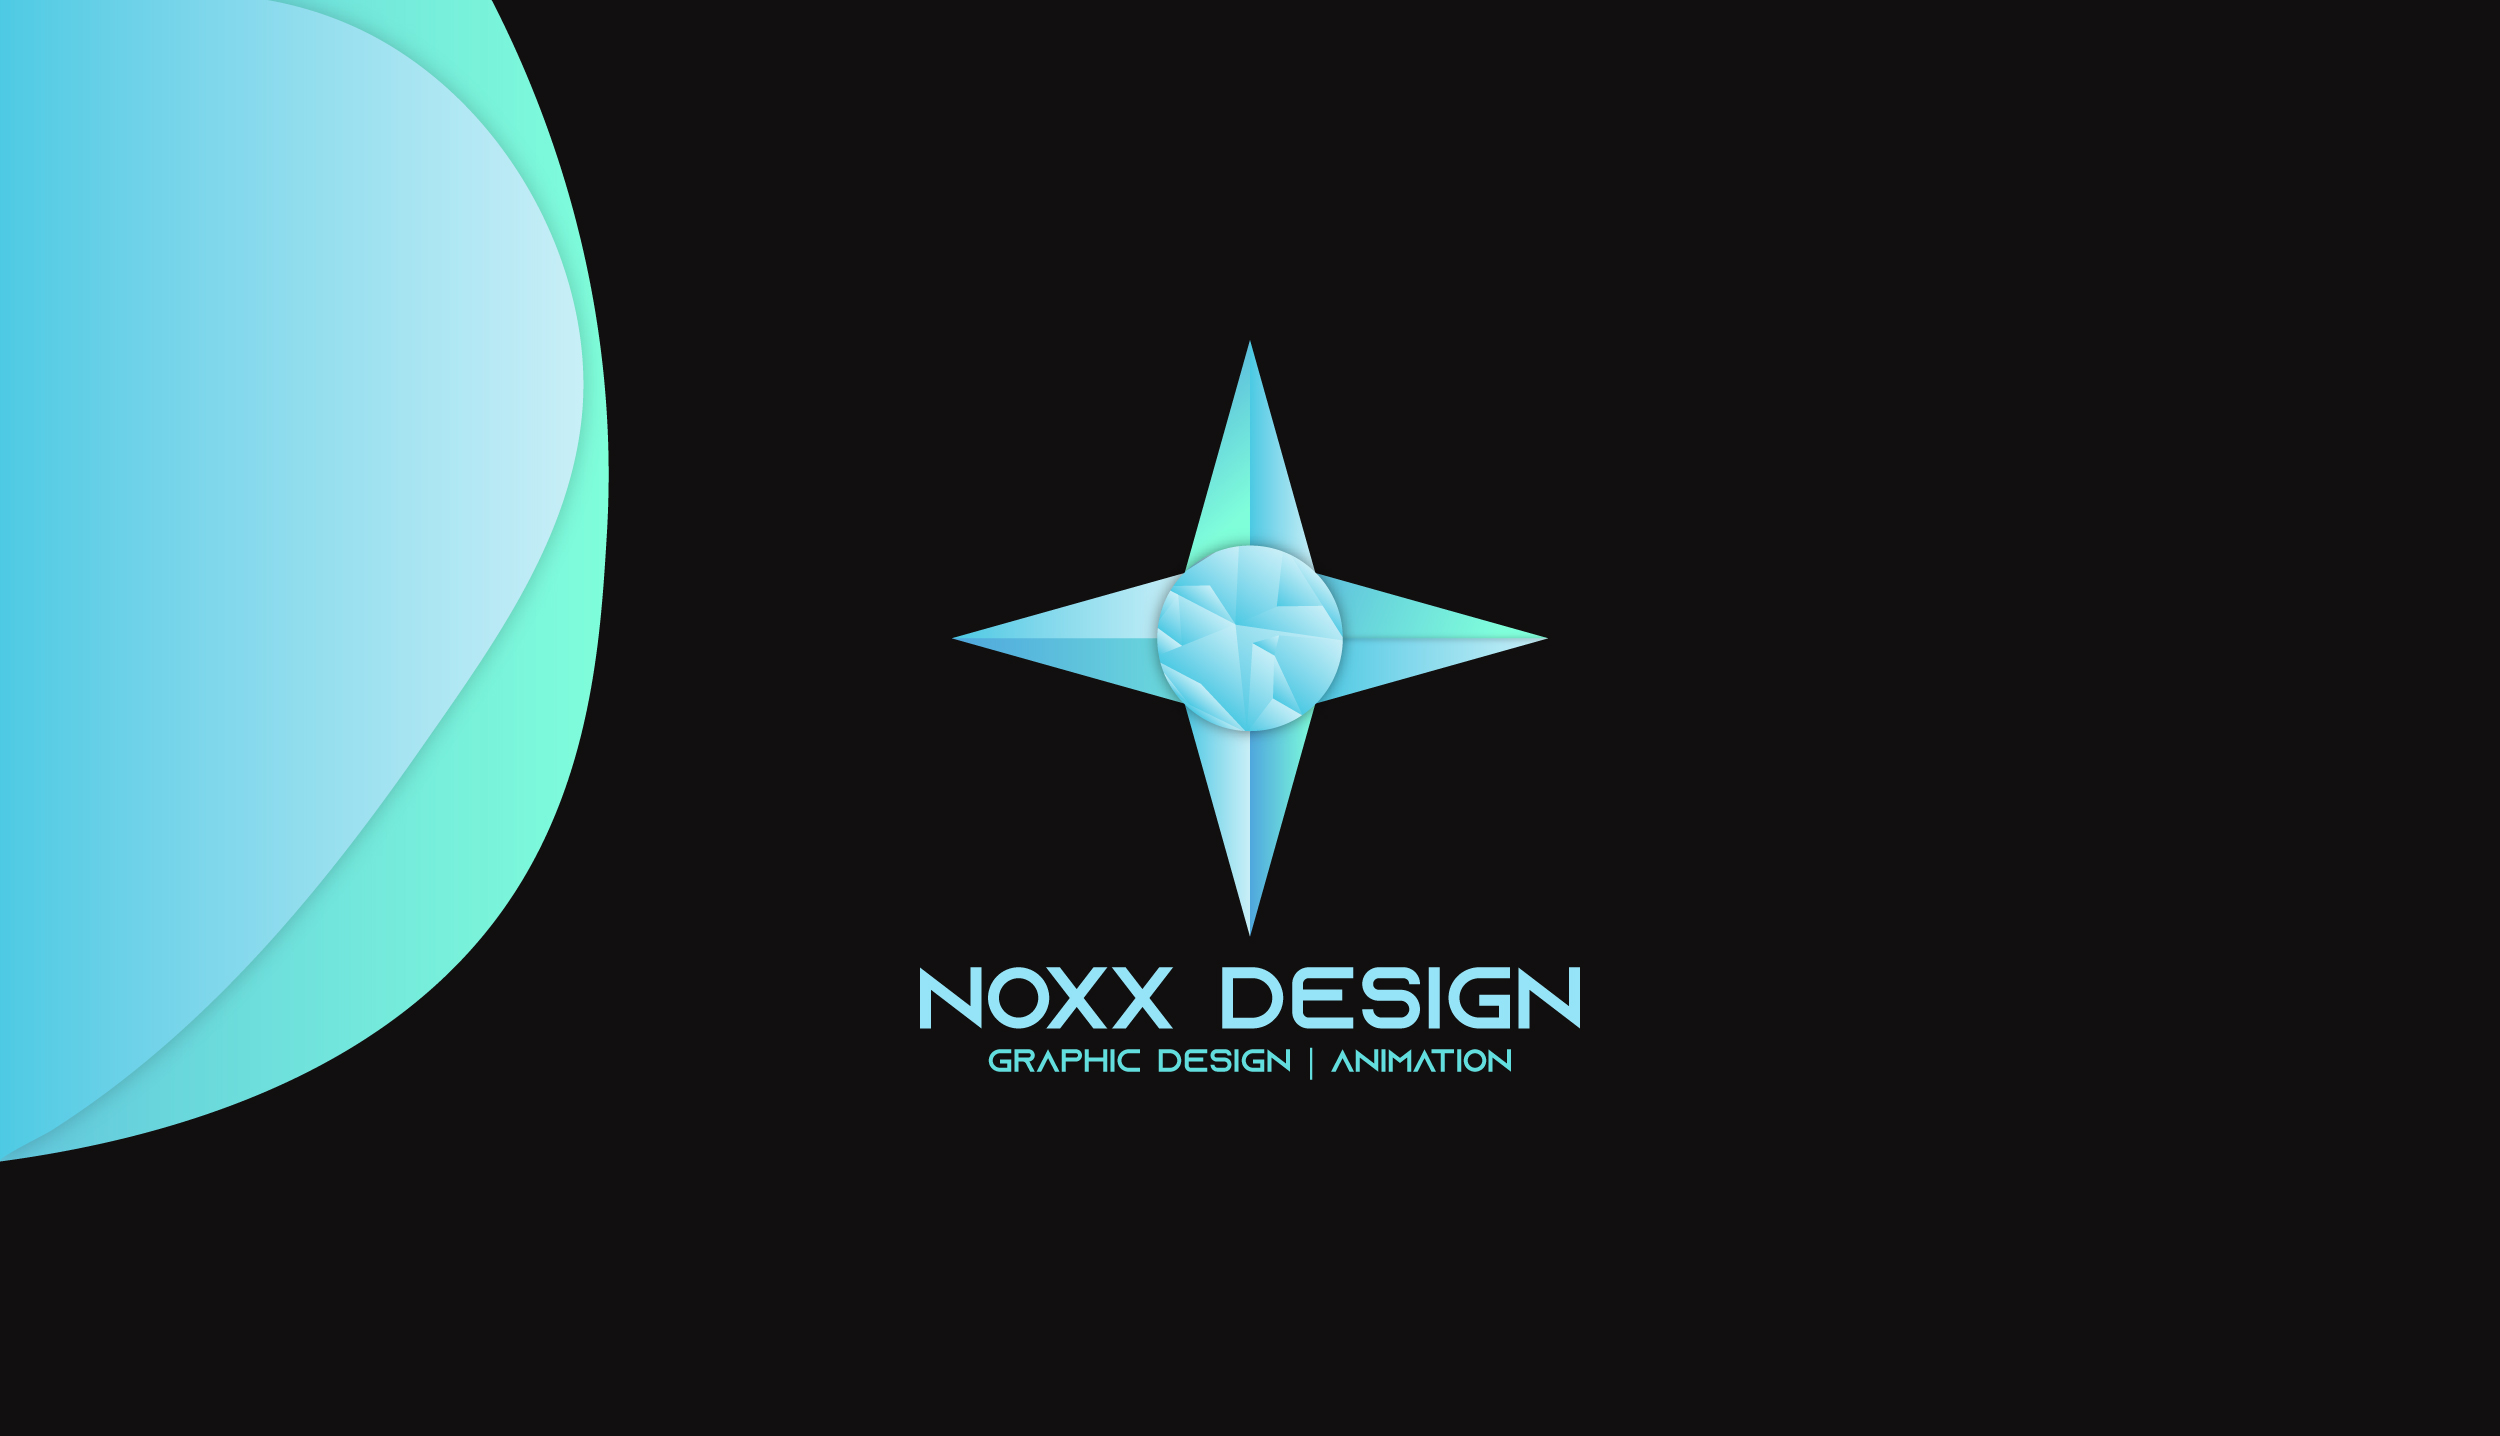 Noxx - Logo by Zypsy on Dribbble